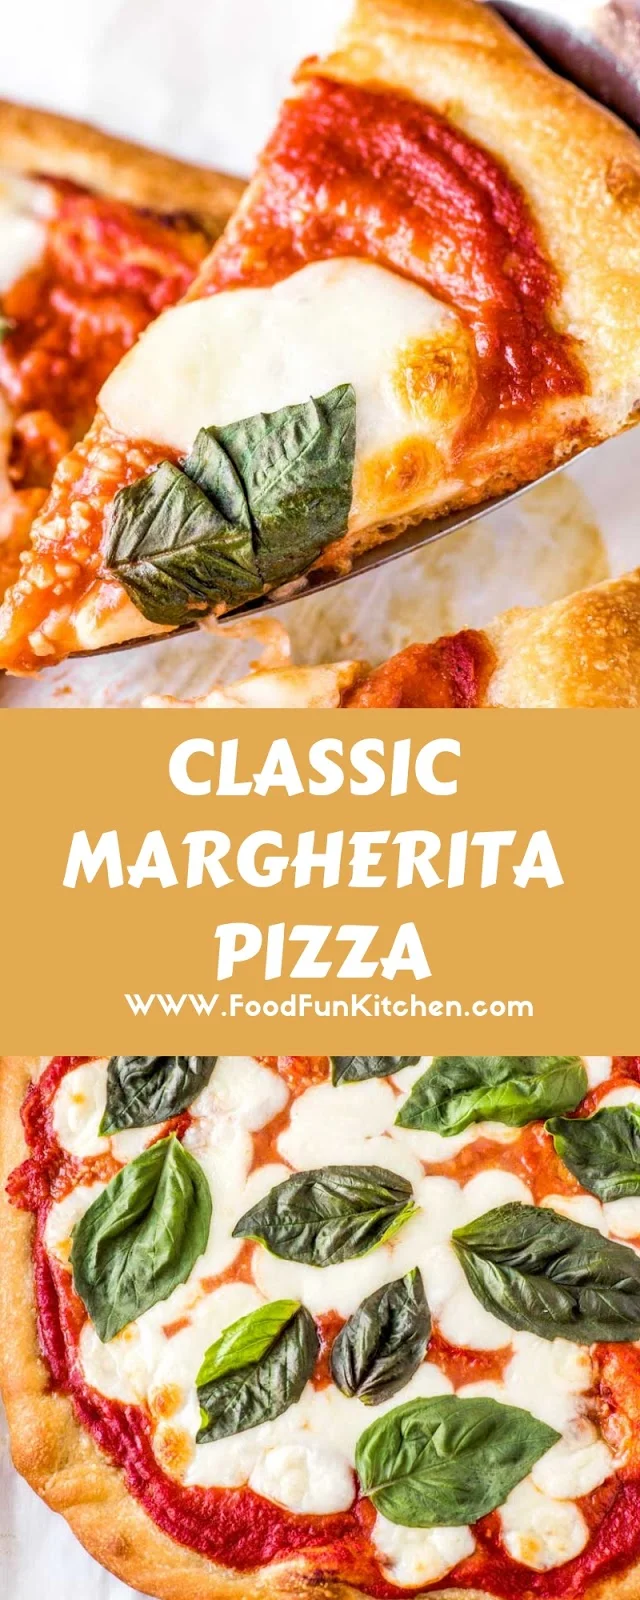 CLASSIC MARGHERITA PIZZA